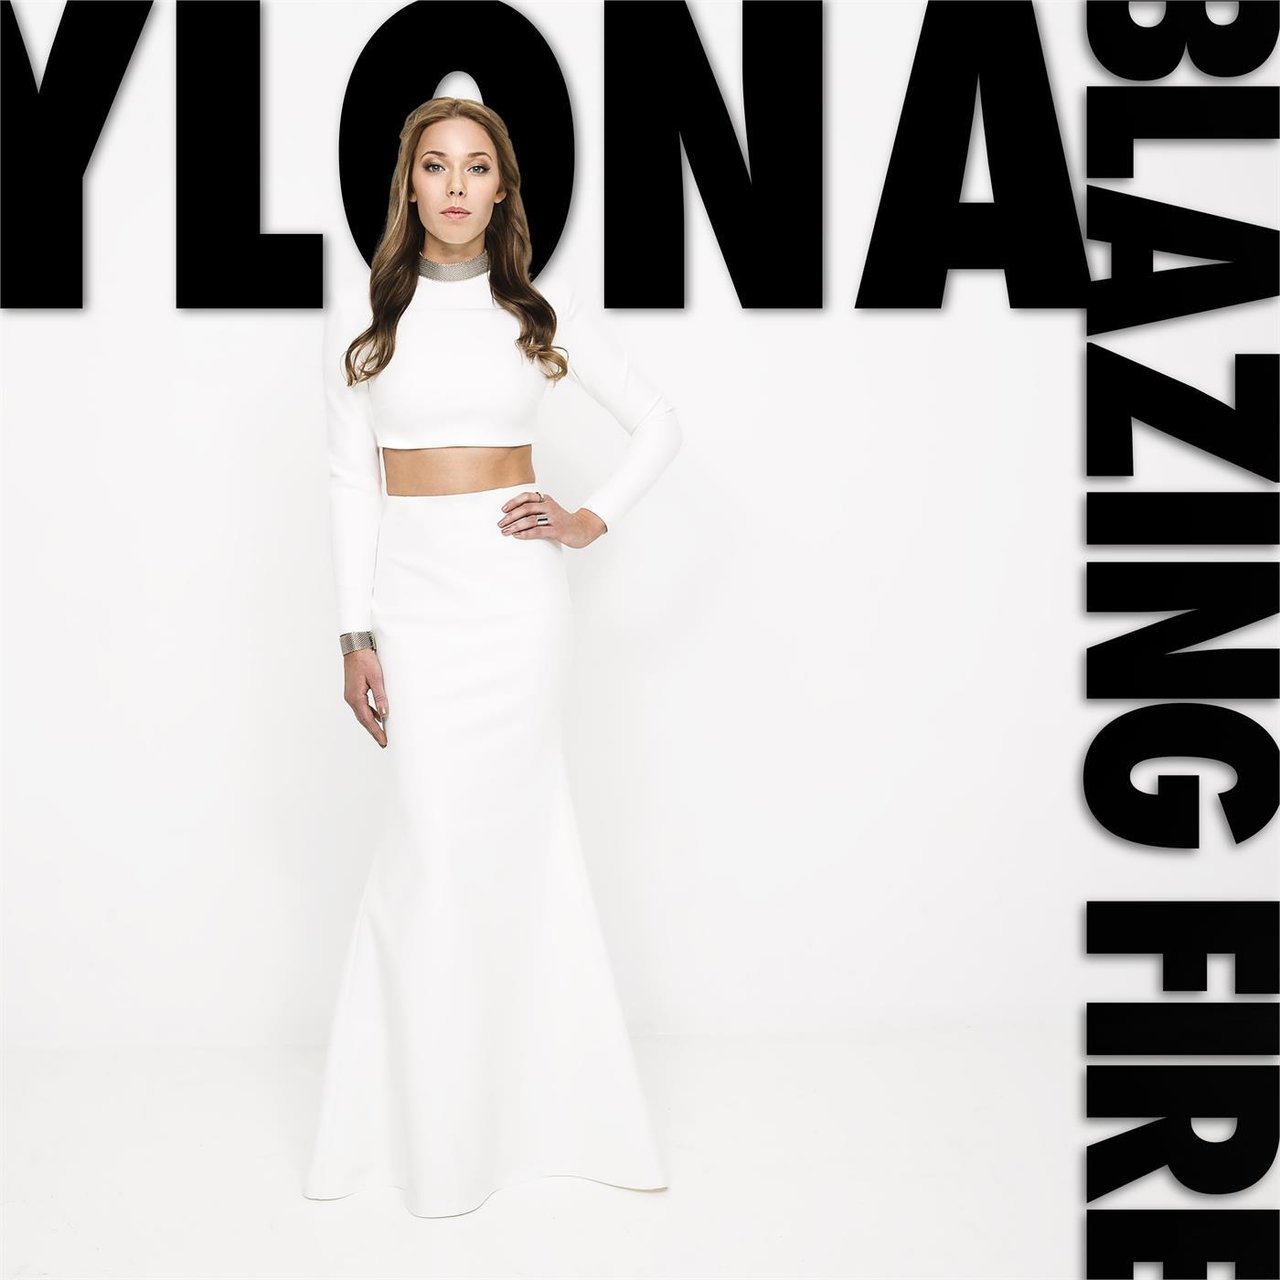 Ylona — Blazing Fire cover artwork